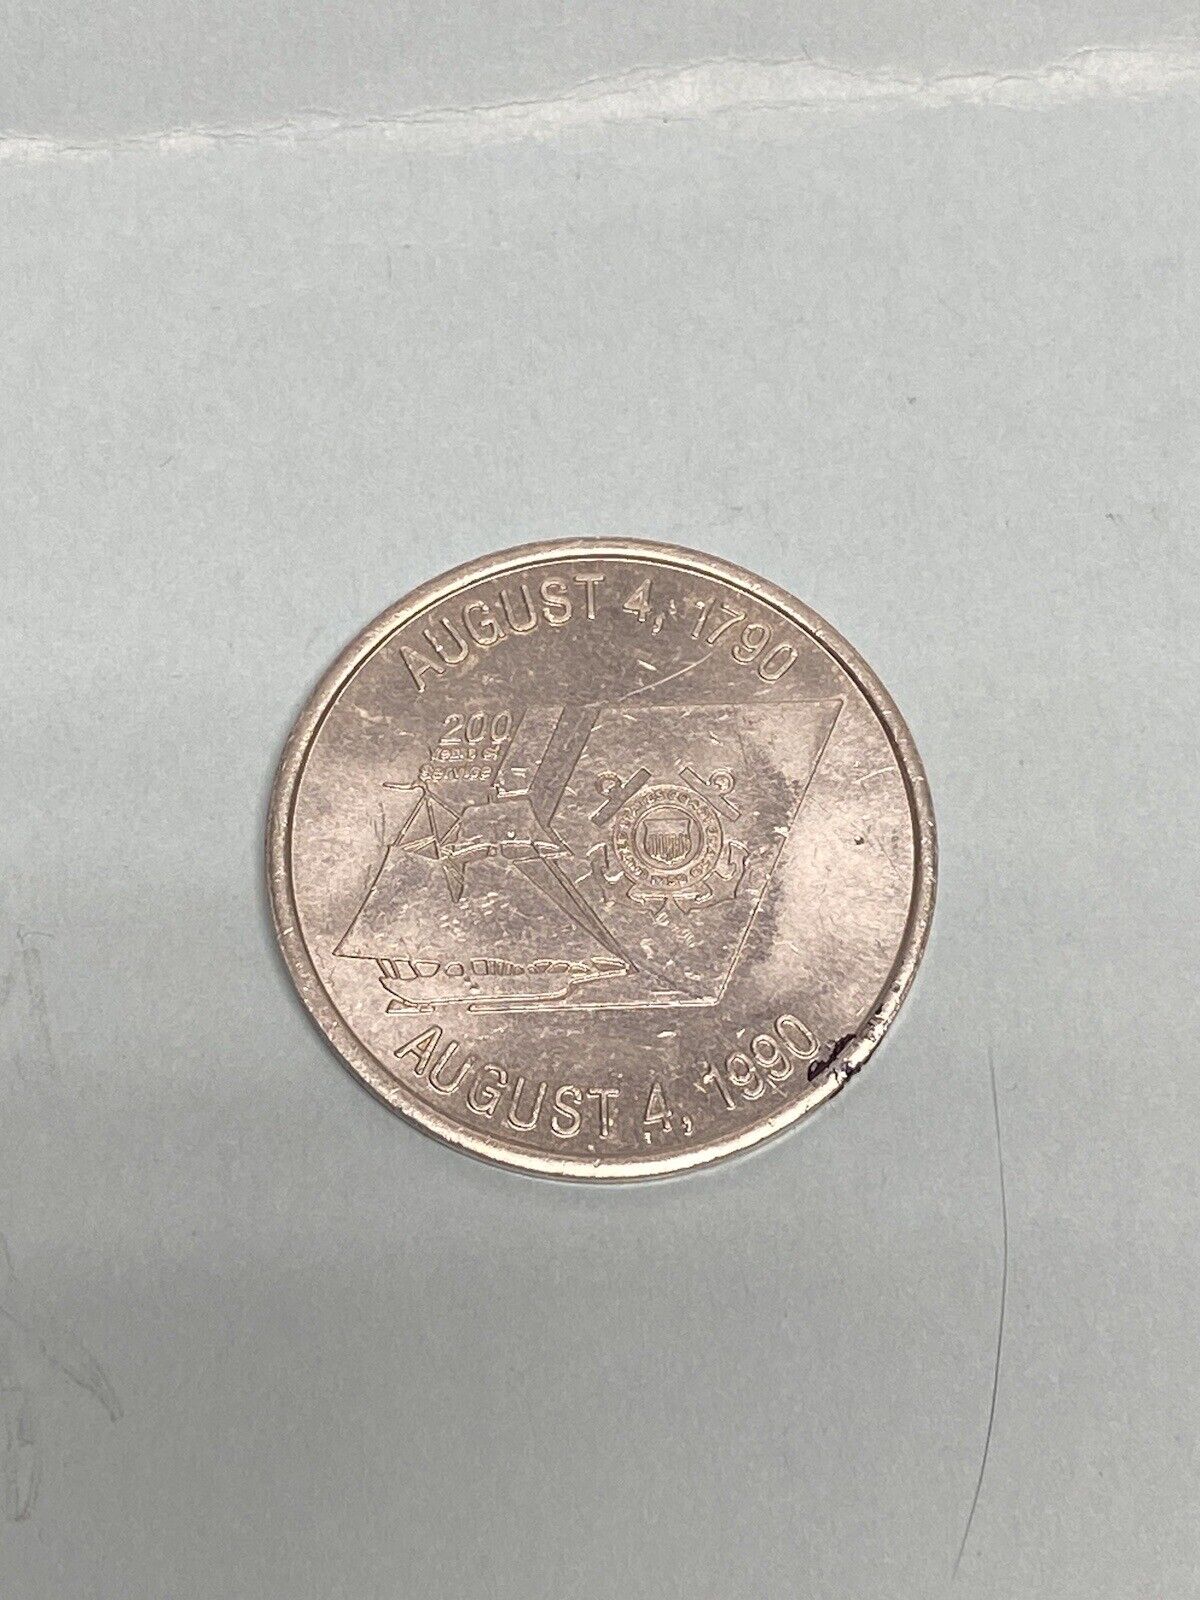 JA3111  United States Coastguard 200 Years 1790 -1990 commemorative coin token